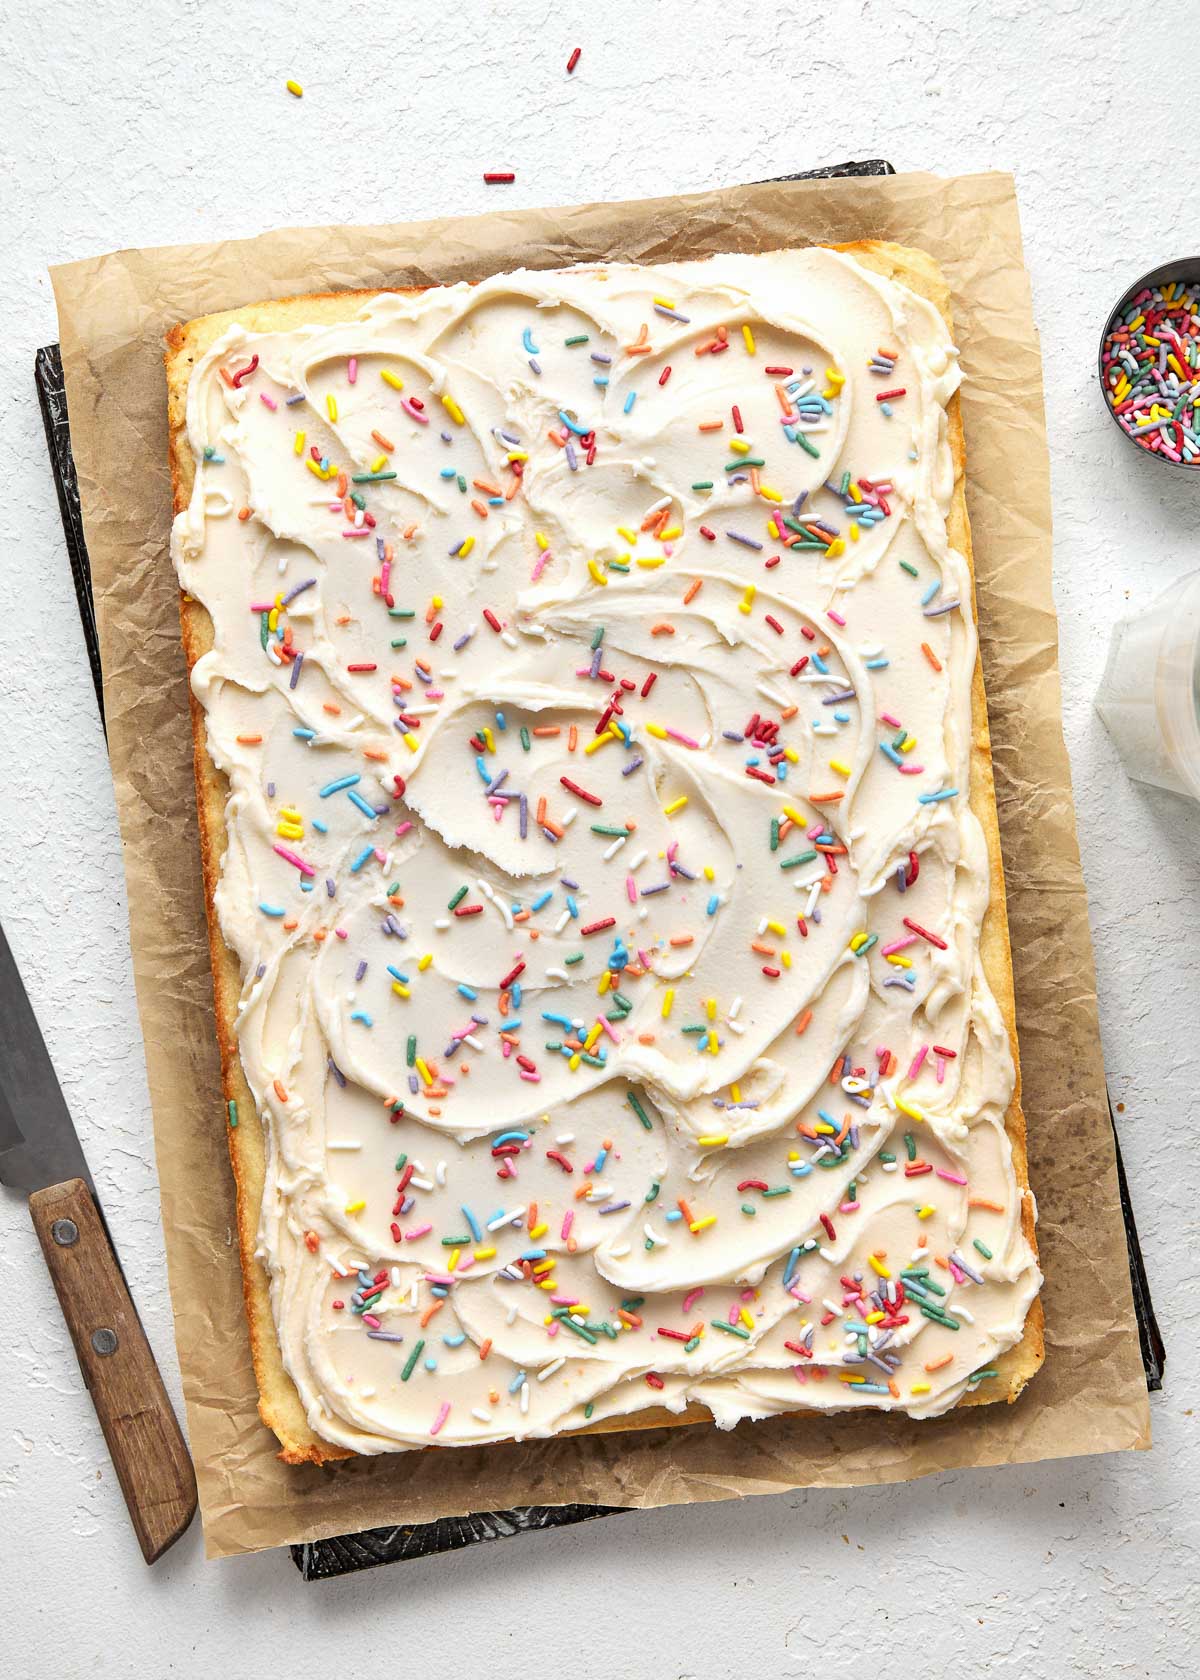 Top view of sugar cookie bars with rainbow.sprinkles on top.